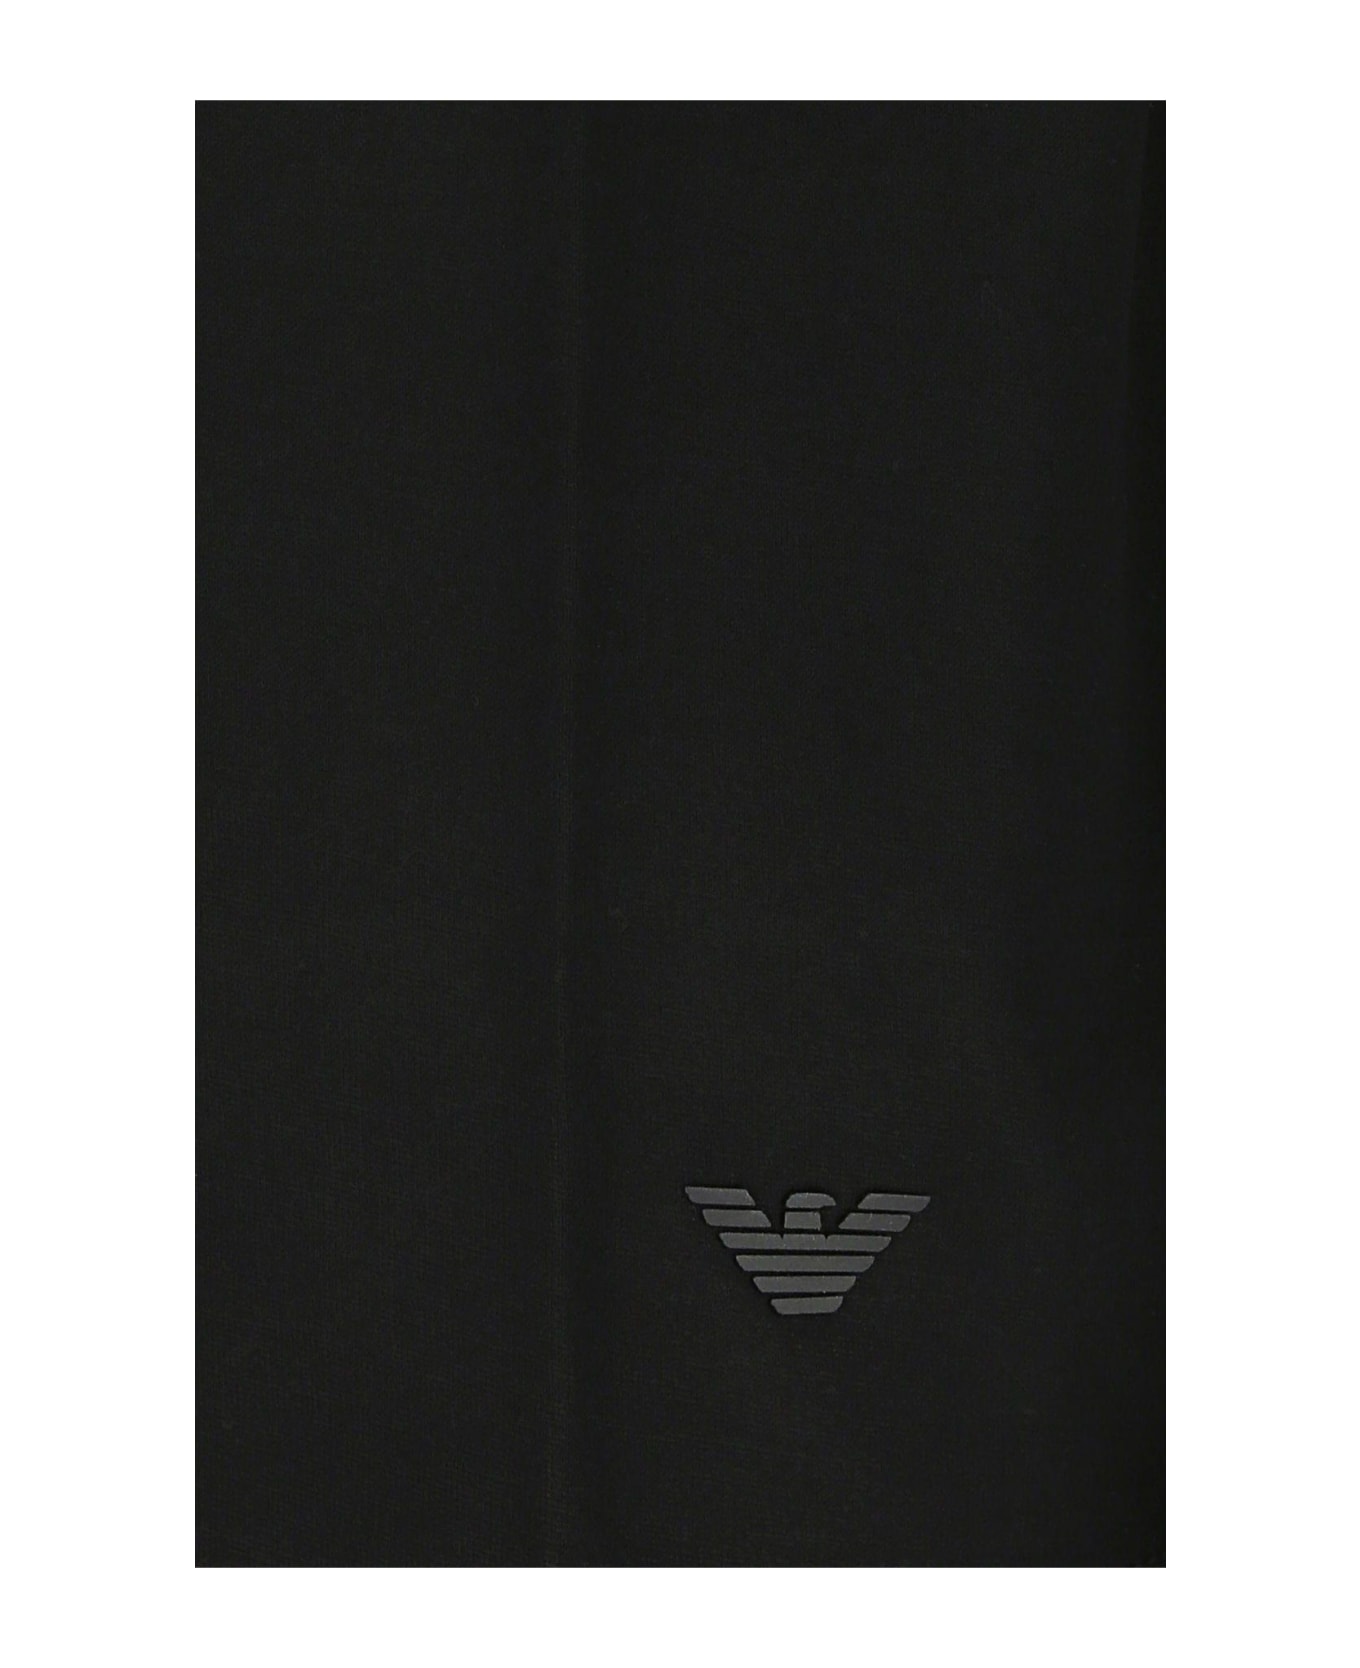 Emporio Armani Black Lyocell Blend Shirt - Black シャツ